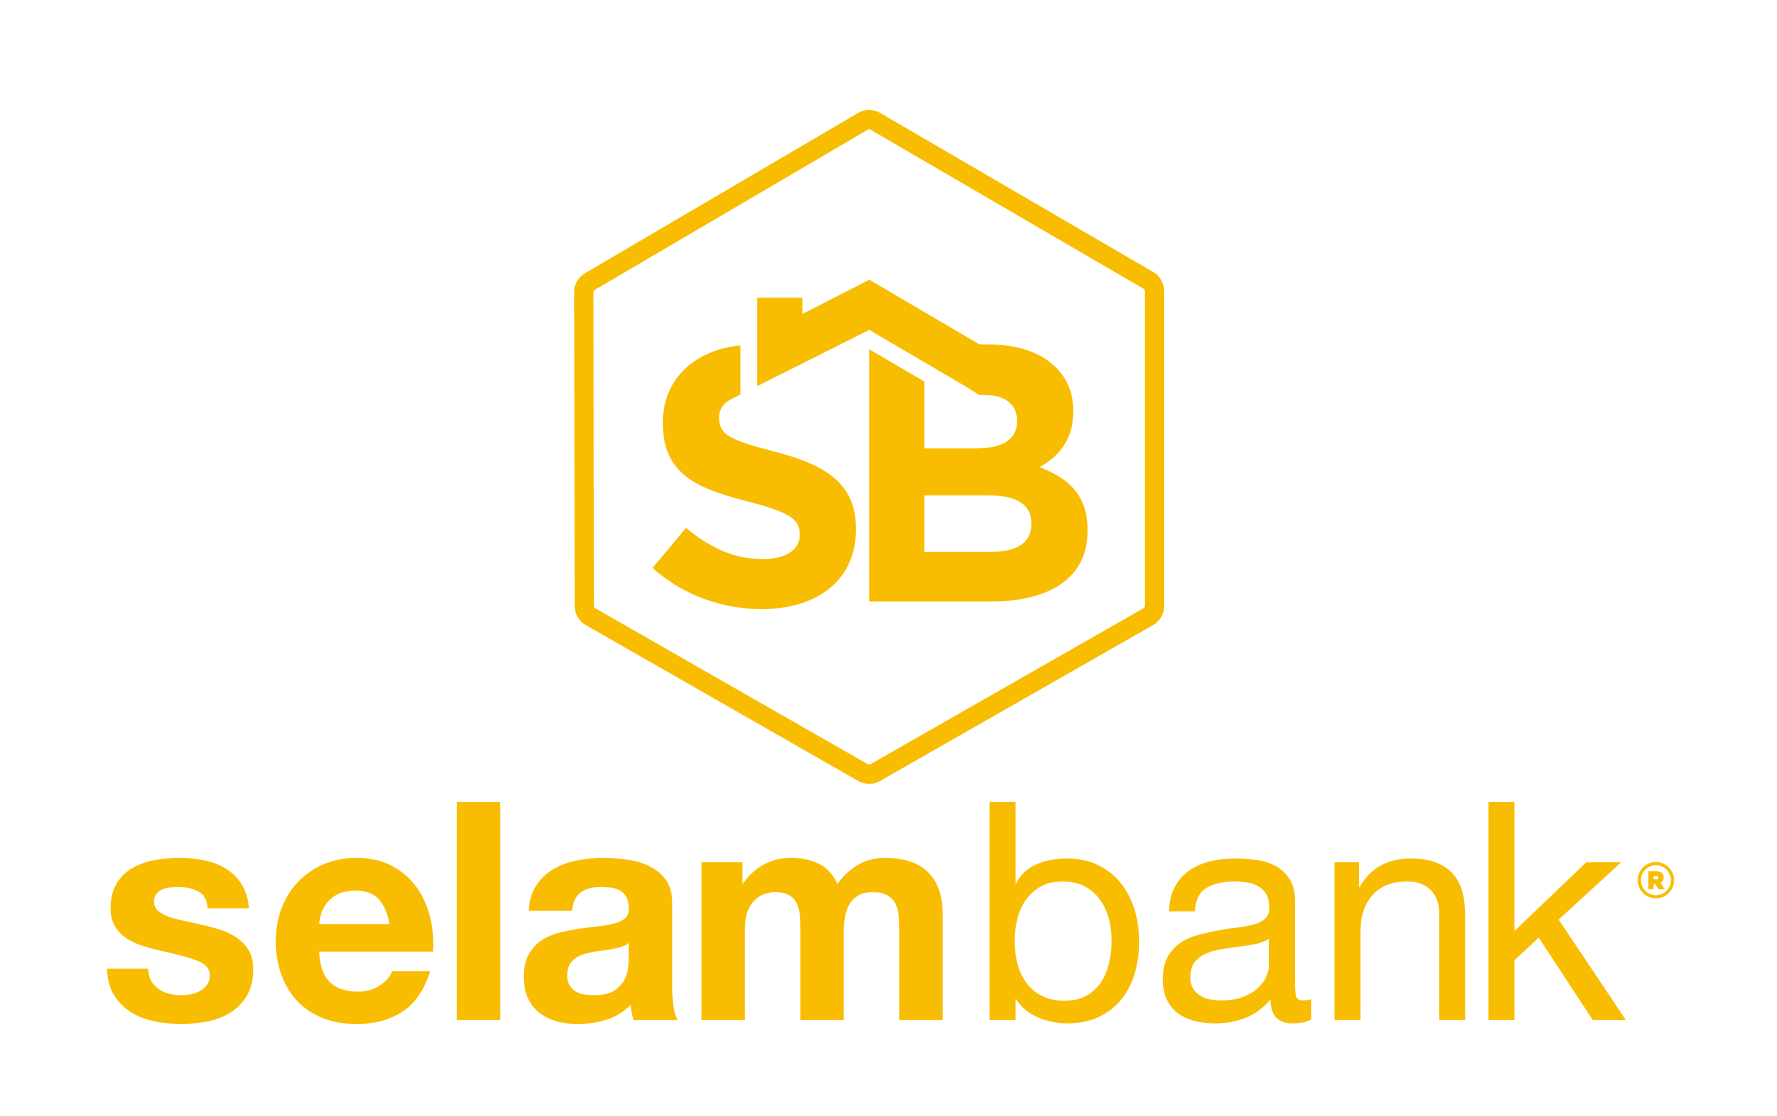 selambank yellow logo